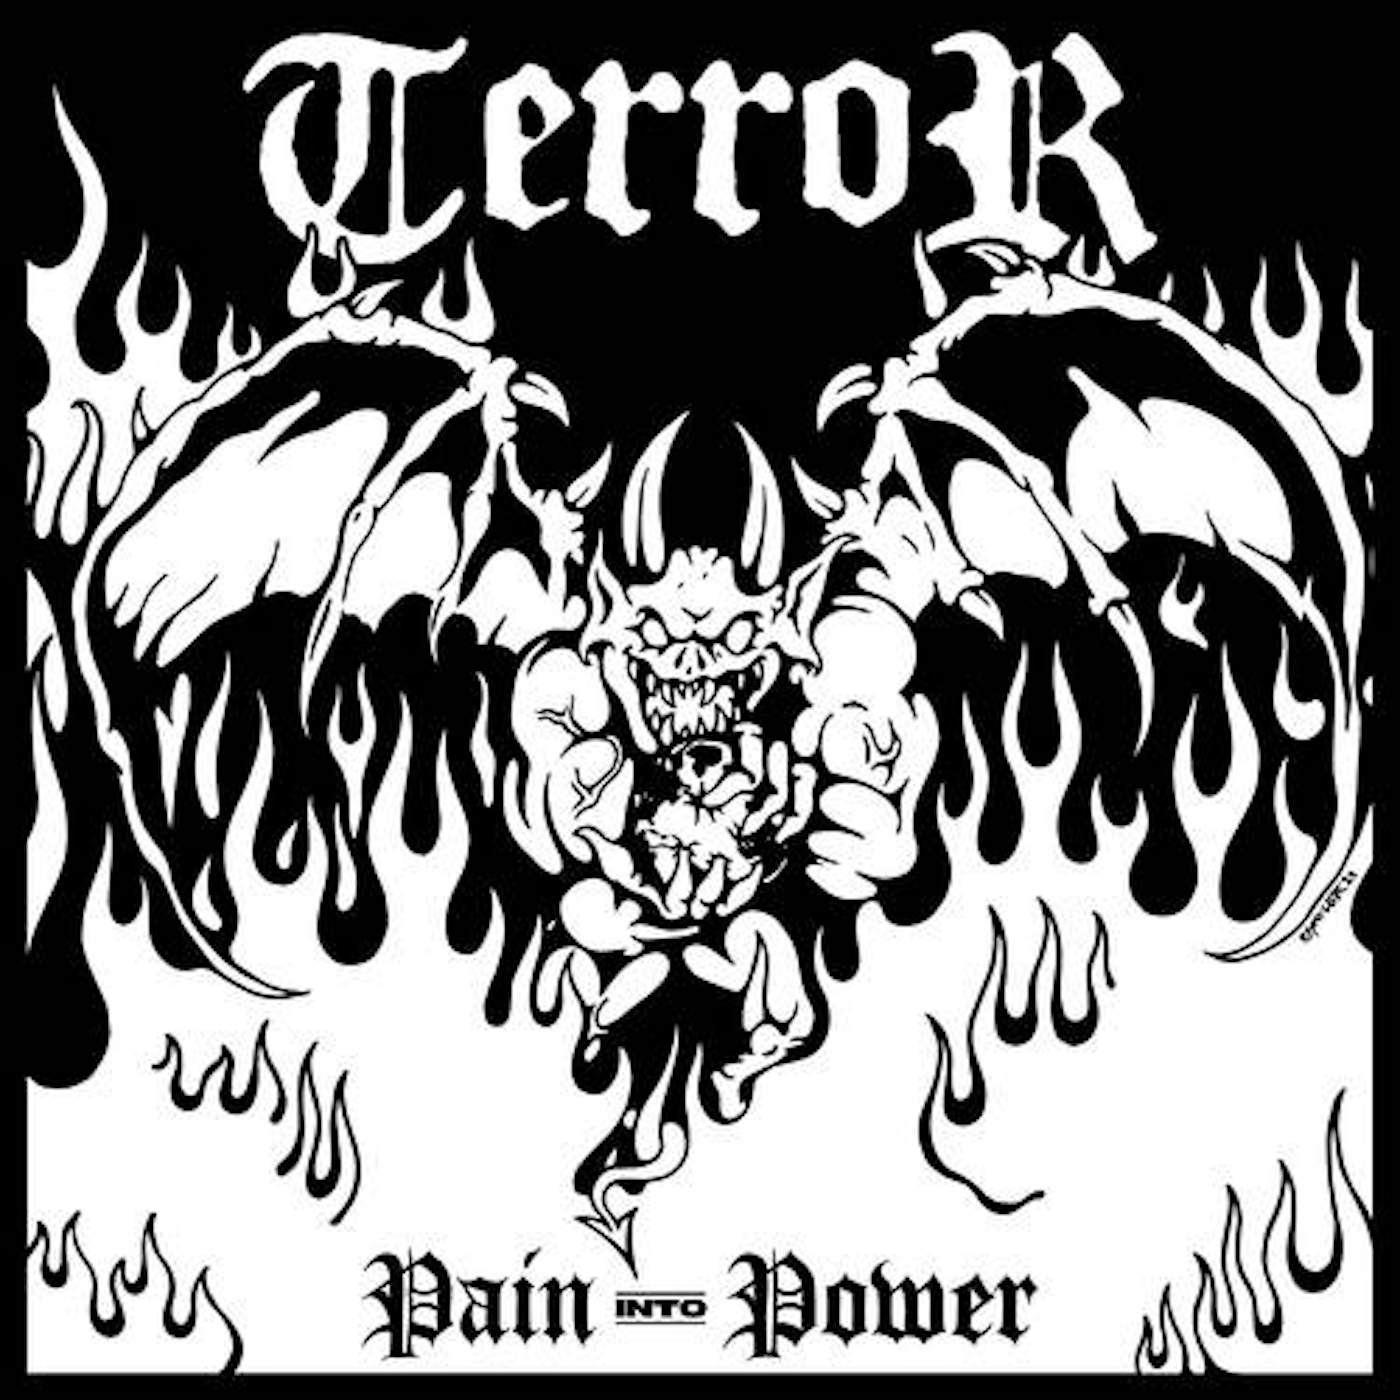 Terror Pain into Power Vinyl Record